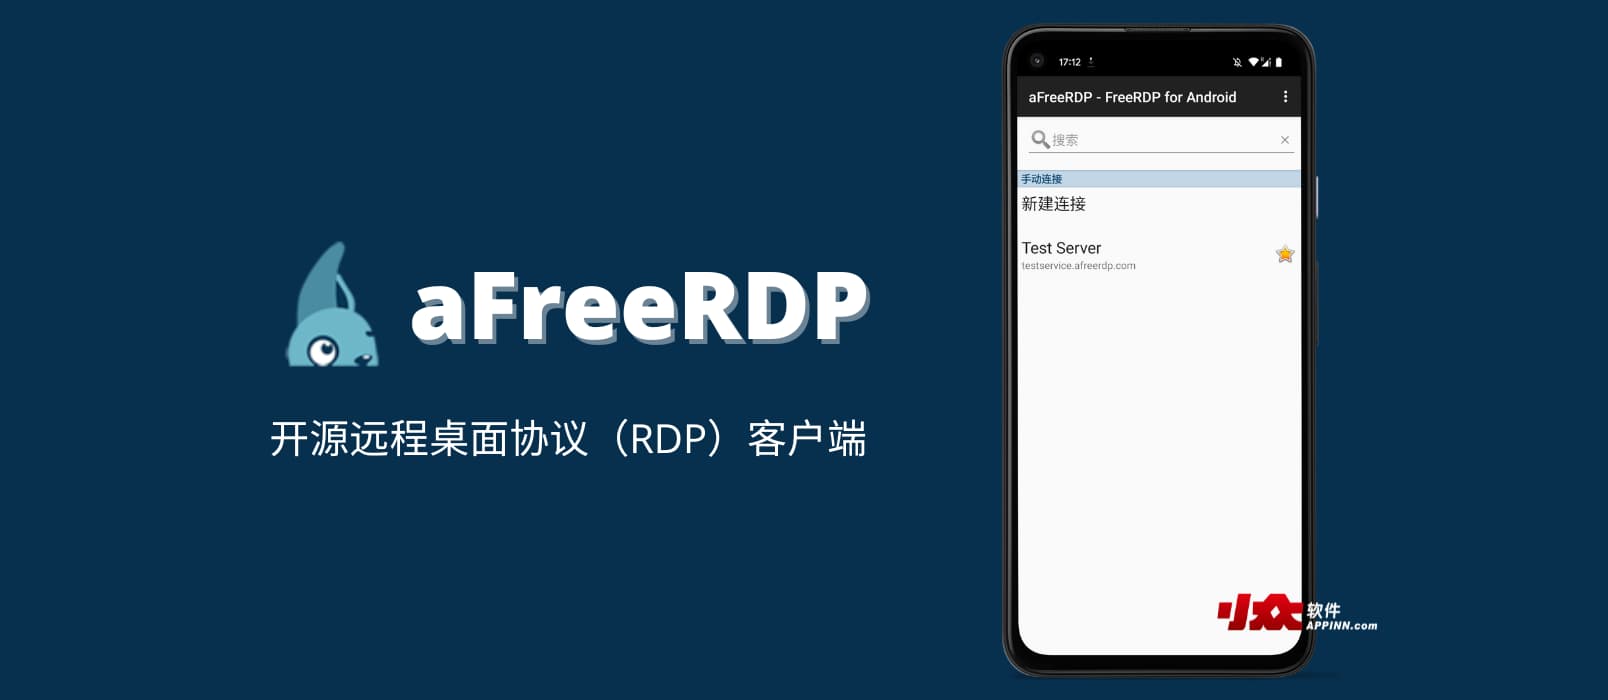 aFreeRDP – 远程桌面协议（RDP）客户端 FreeRDP 的 Android 版本